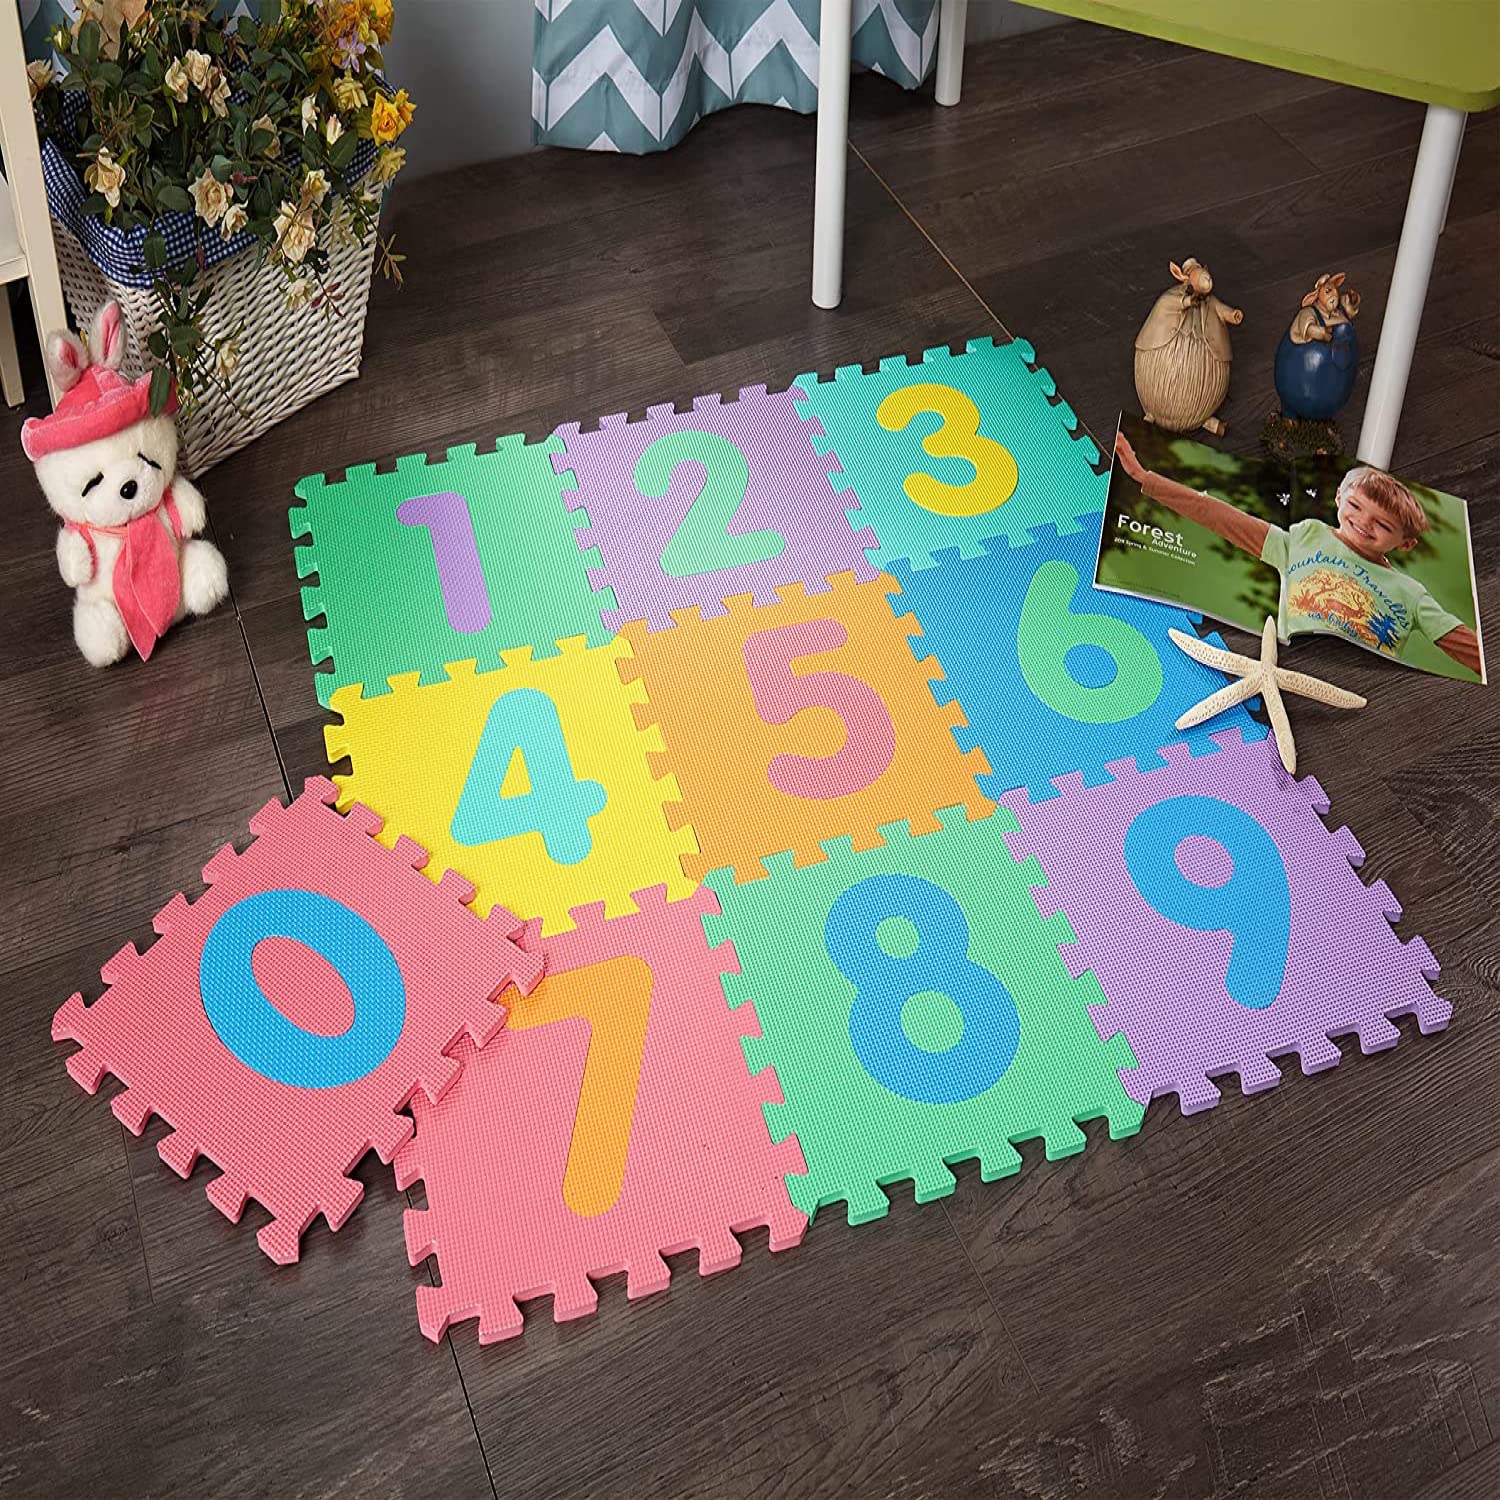 31 * 31 cm Kids ABCD mats Large Size Floor Alphabet mats for Kids Puzzle Interlocking Learning Foam alphabetic  Play mat Big Size Mats